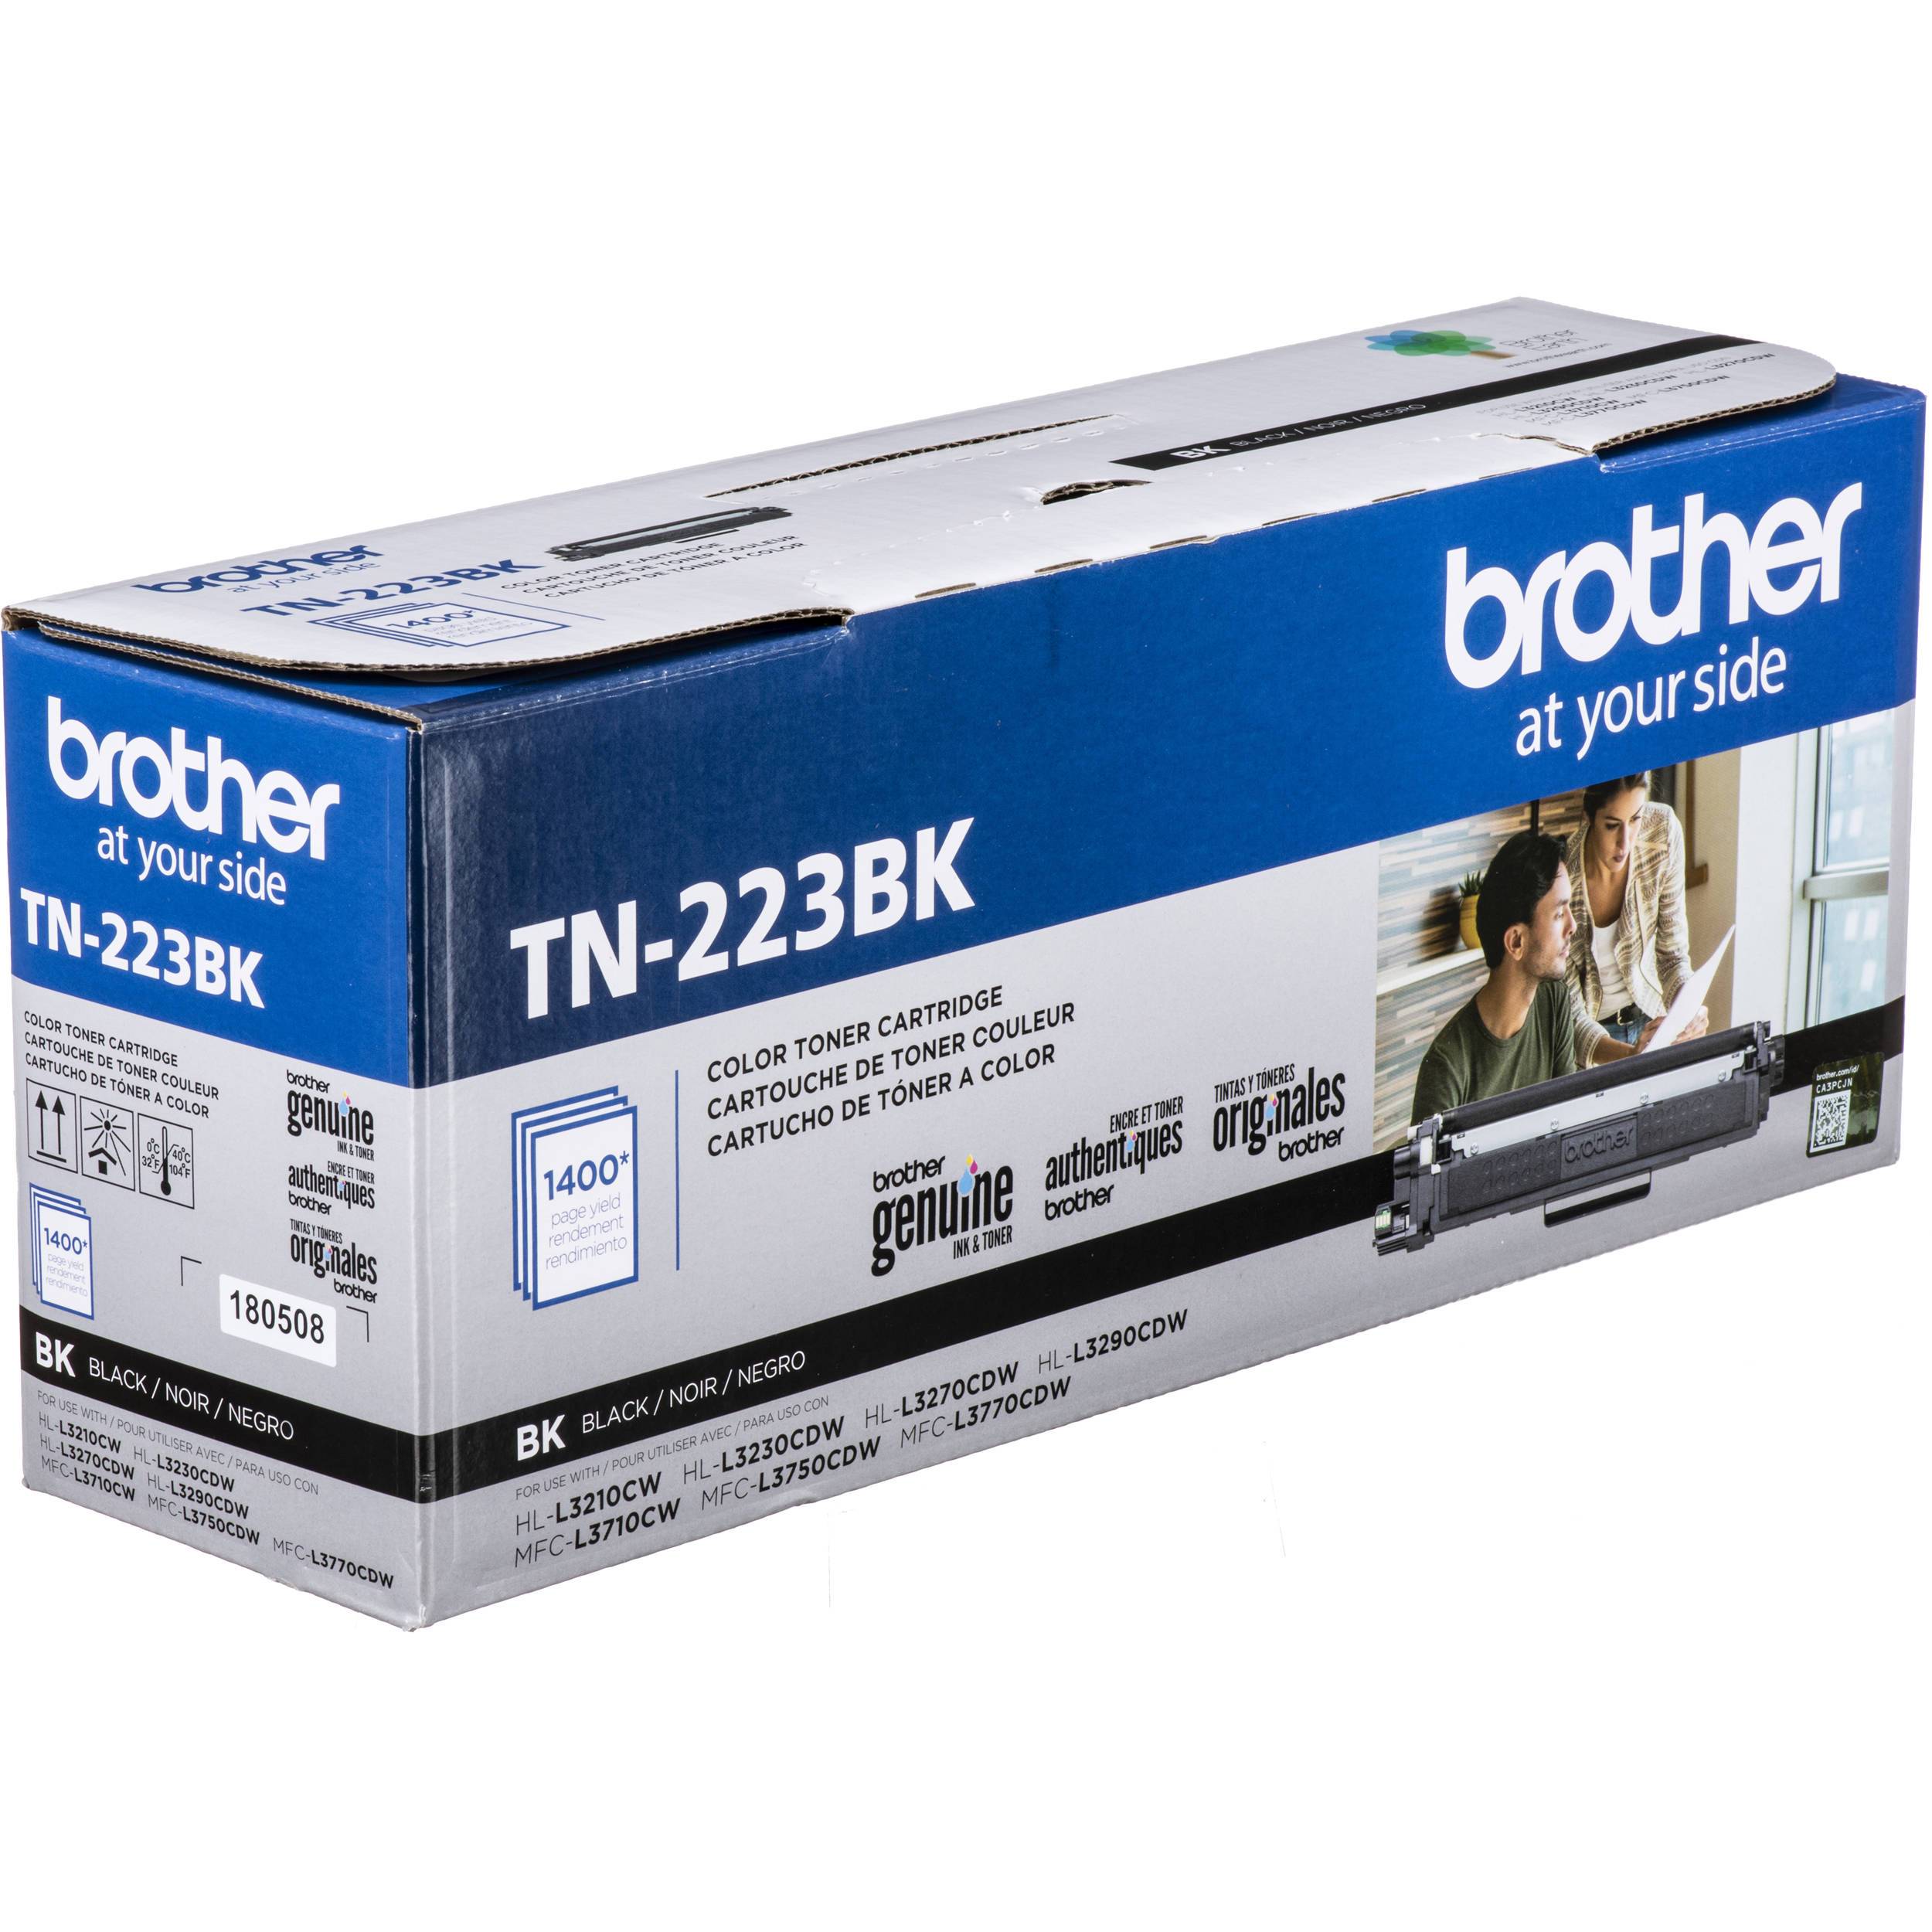 Absolute Toner Brother Genuine OEM TN223BK, Standard Yield Black Toner Cartridge Original Brother Cartridges